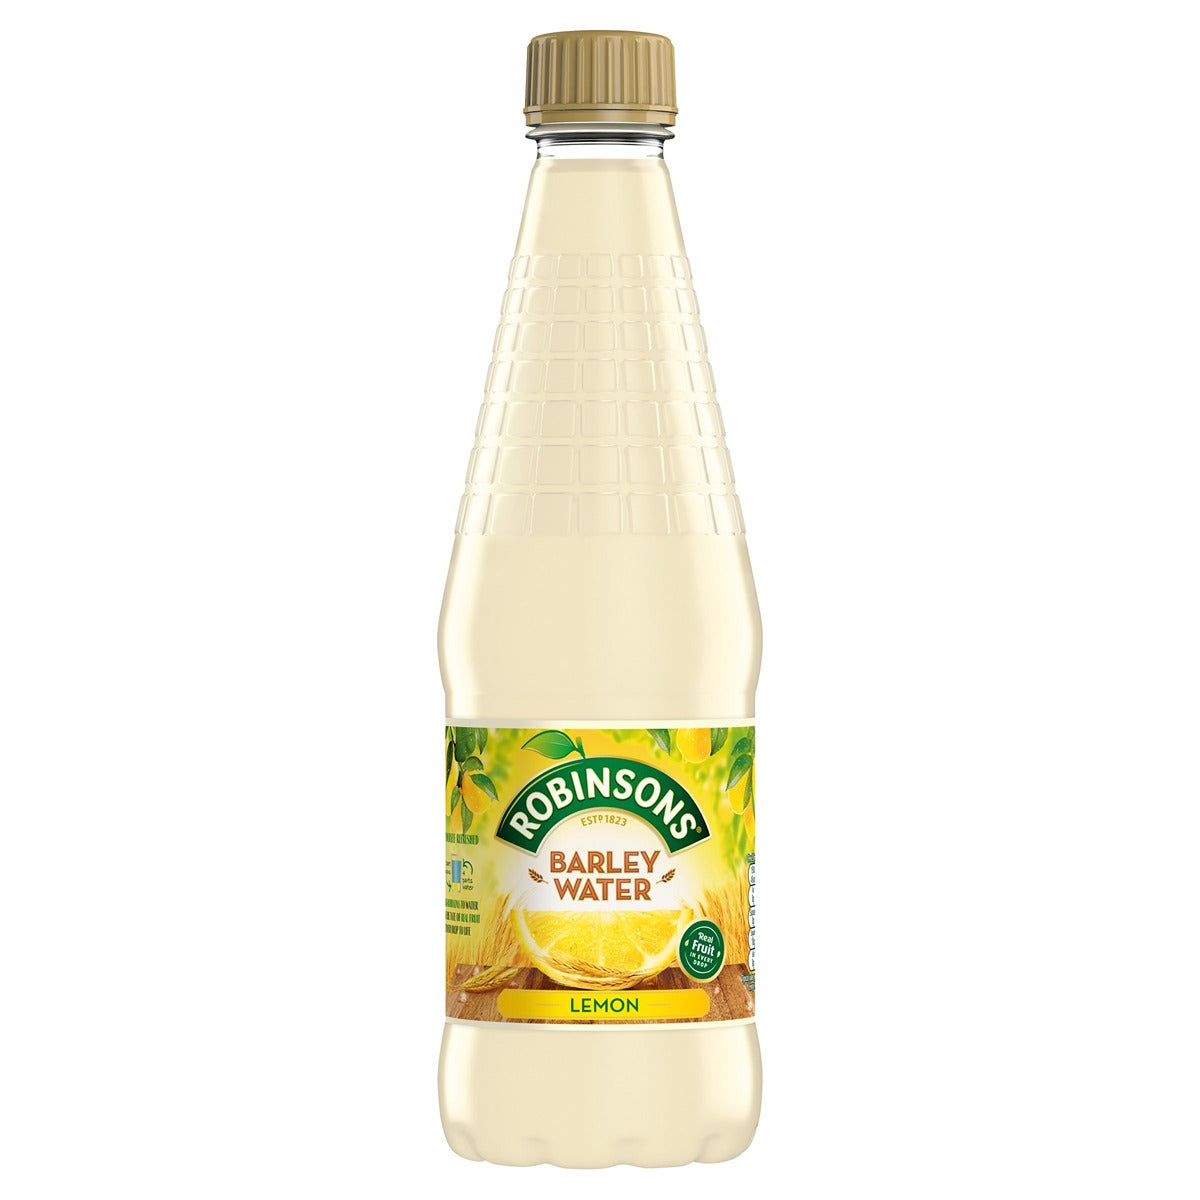 Robinsons - Barley Water Lemon - 850ml - Continental Food Store